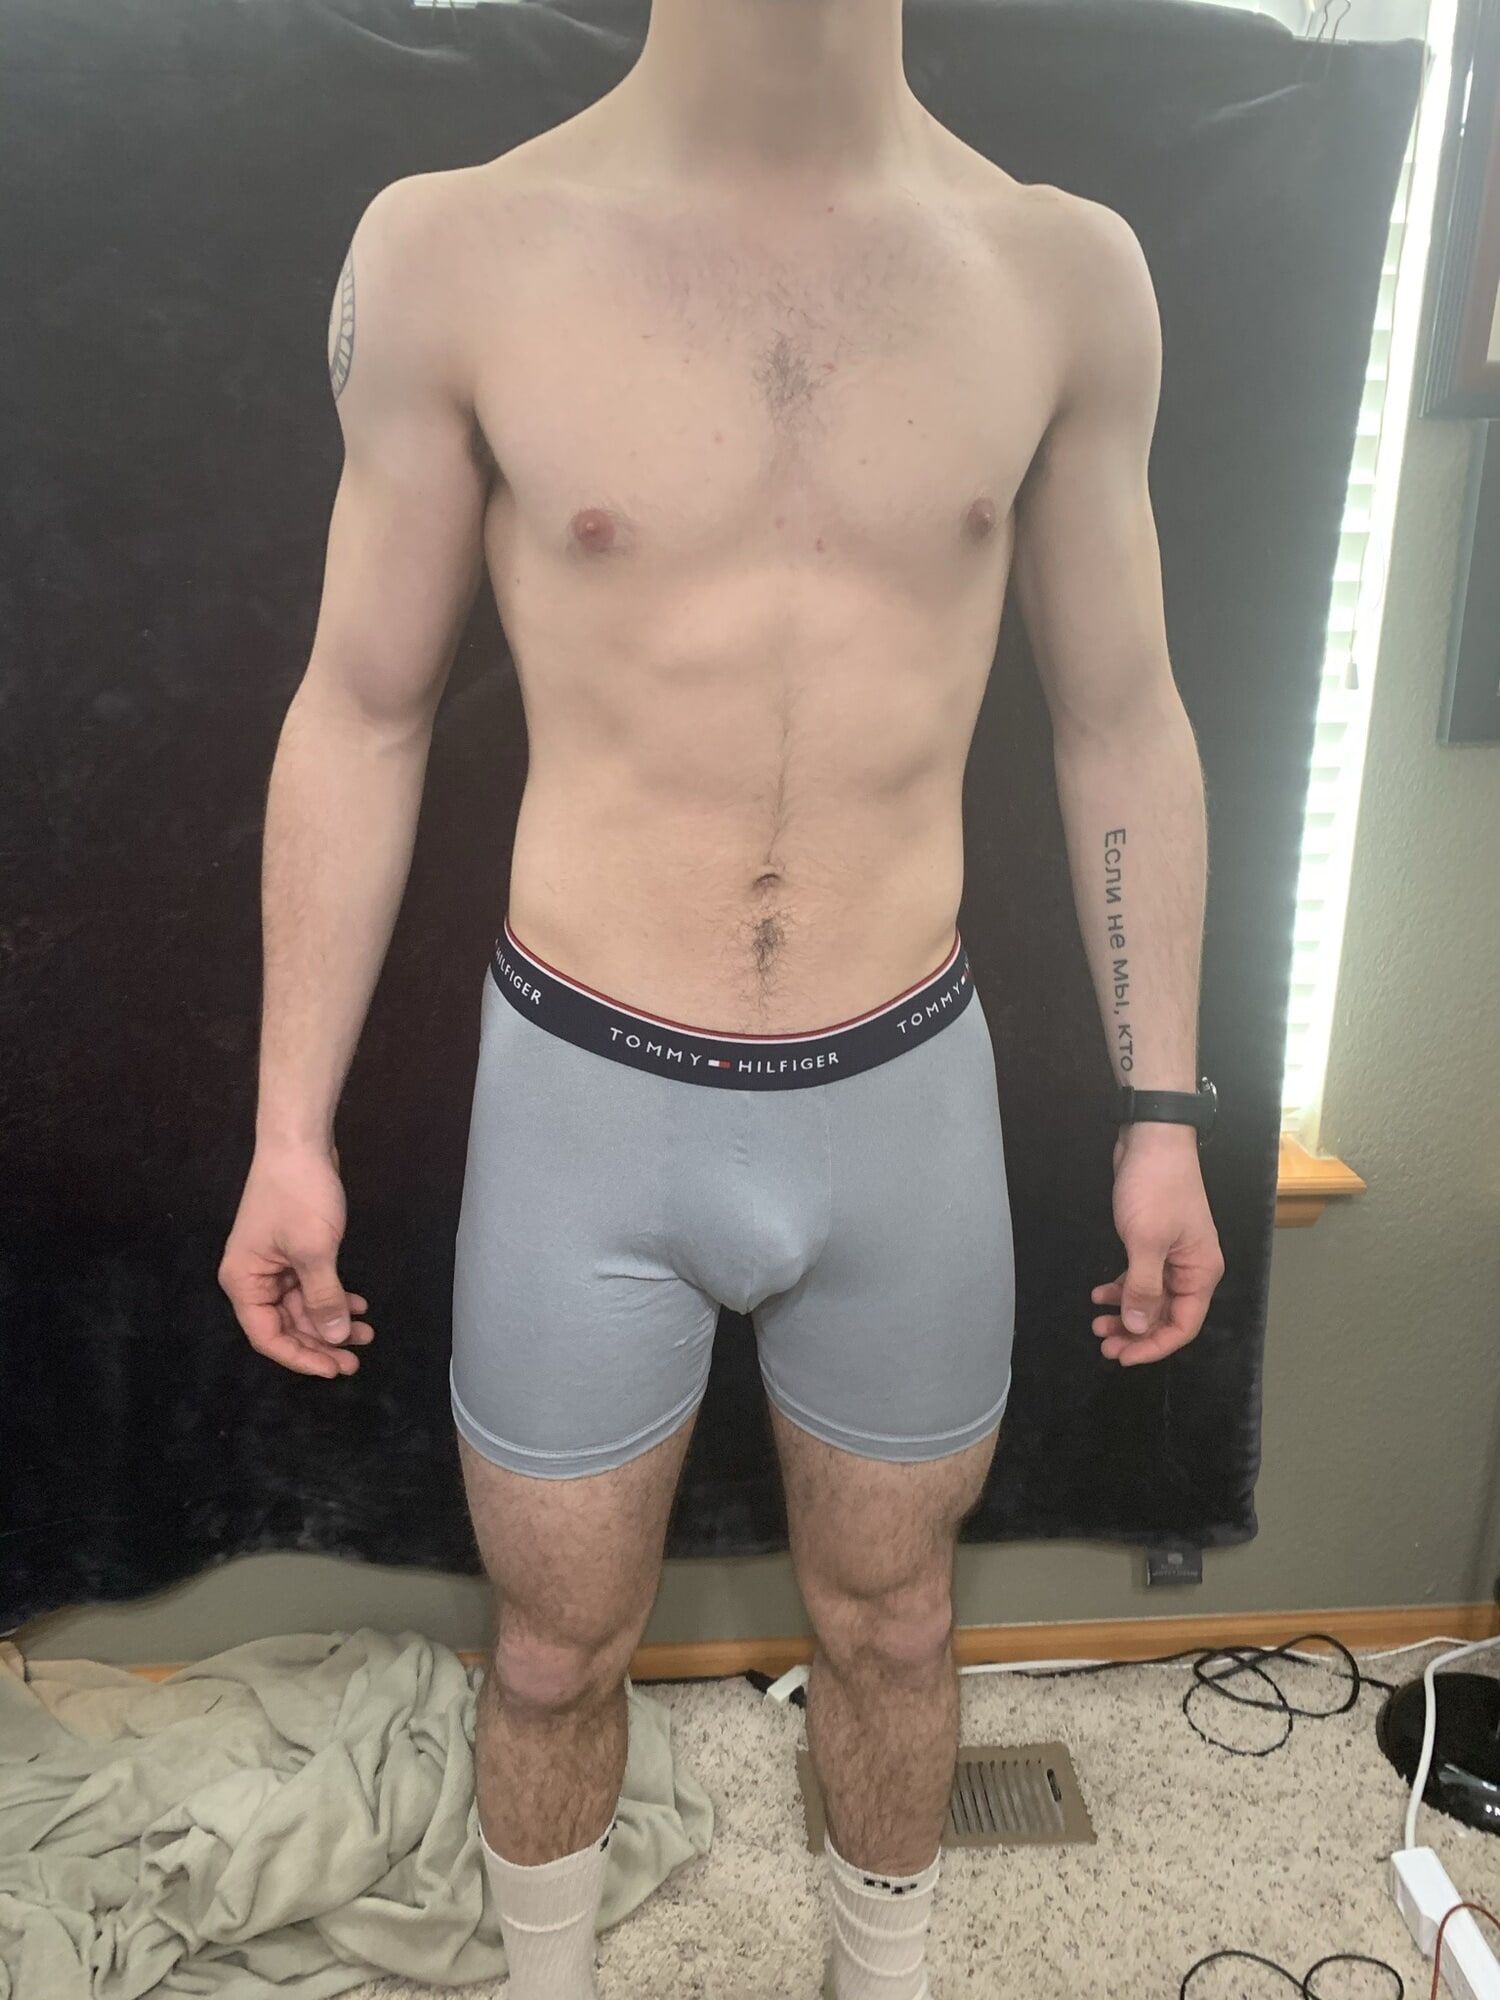 More showing off in undies! #37